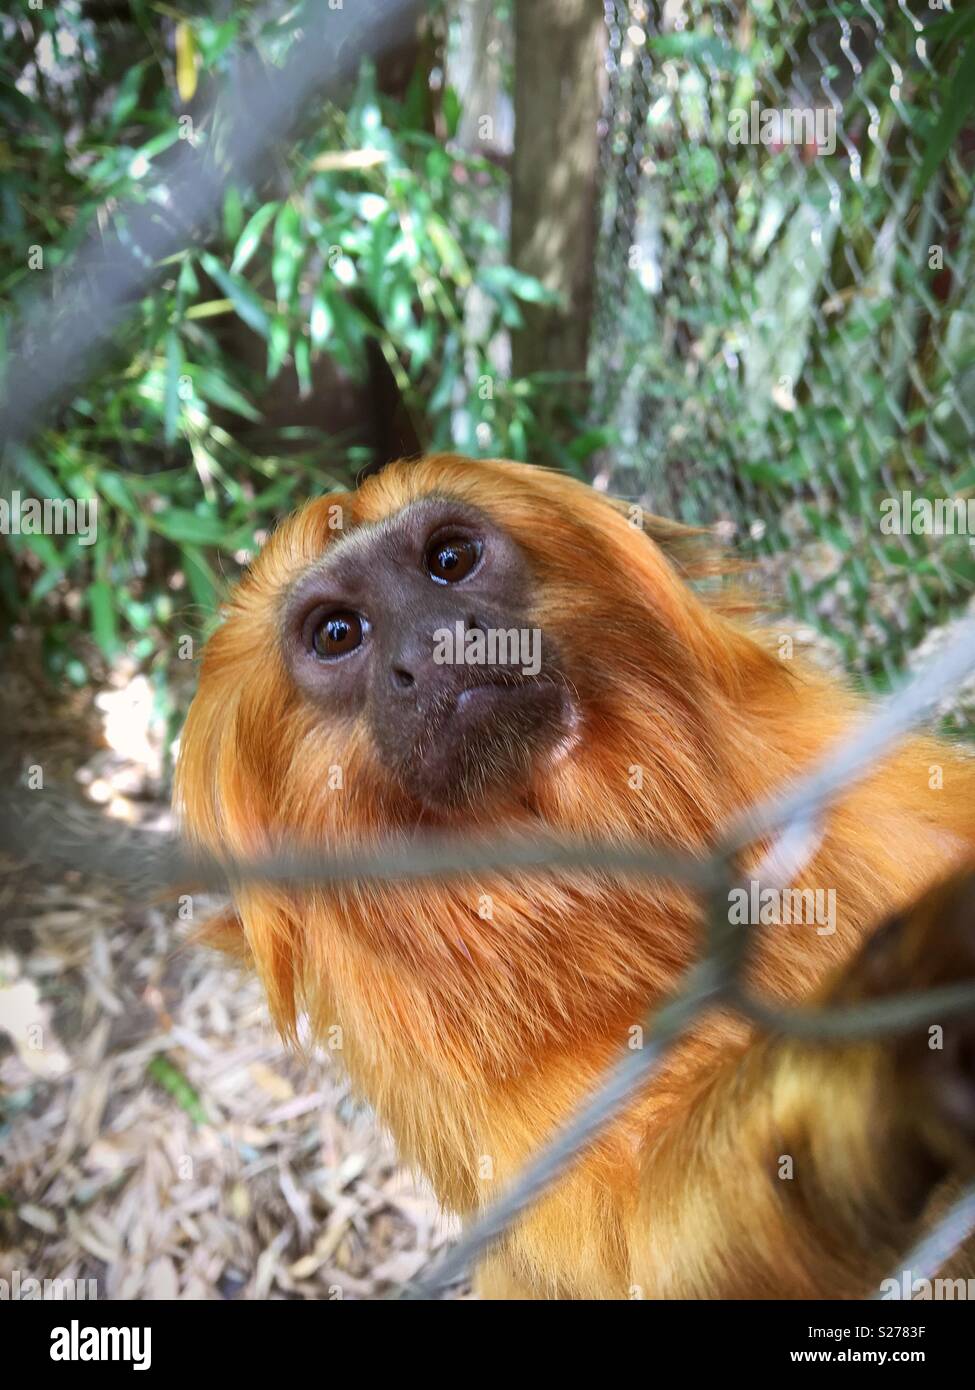 A golden lion tamarin monkey. Stock Photo